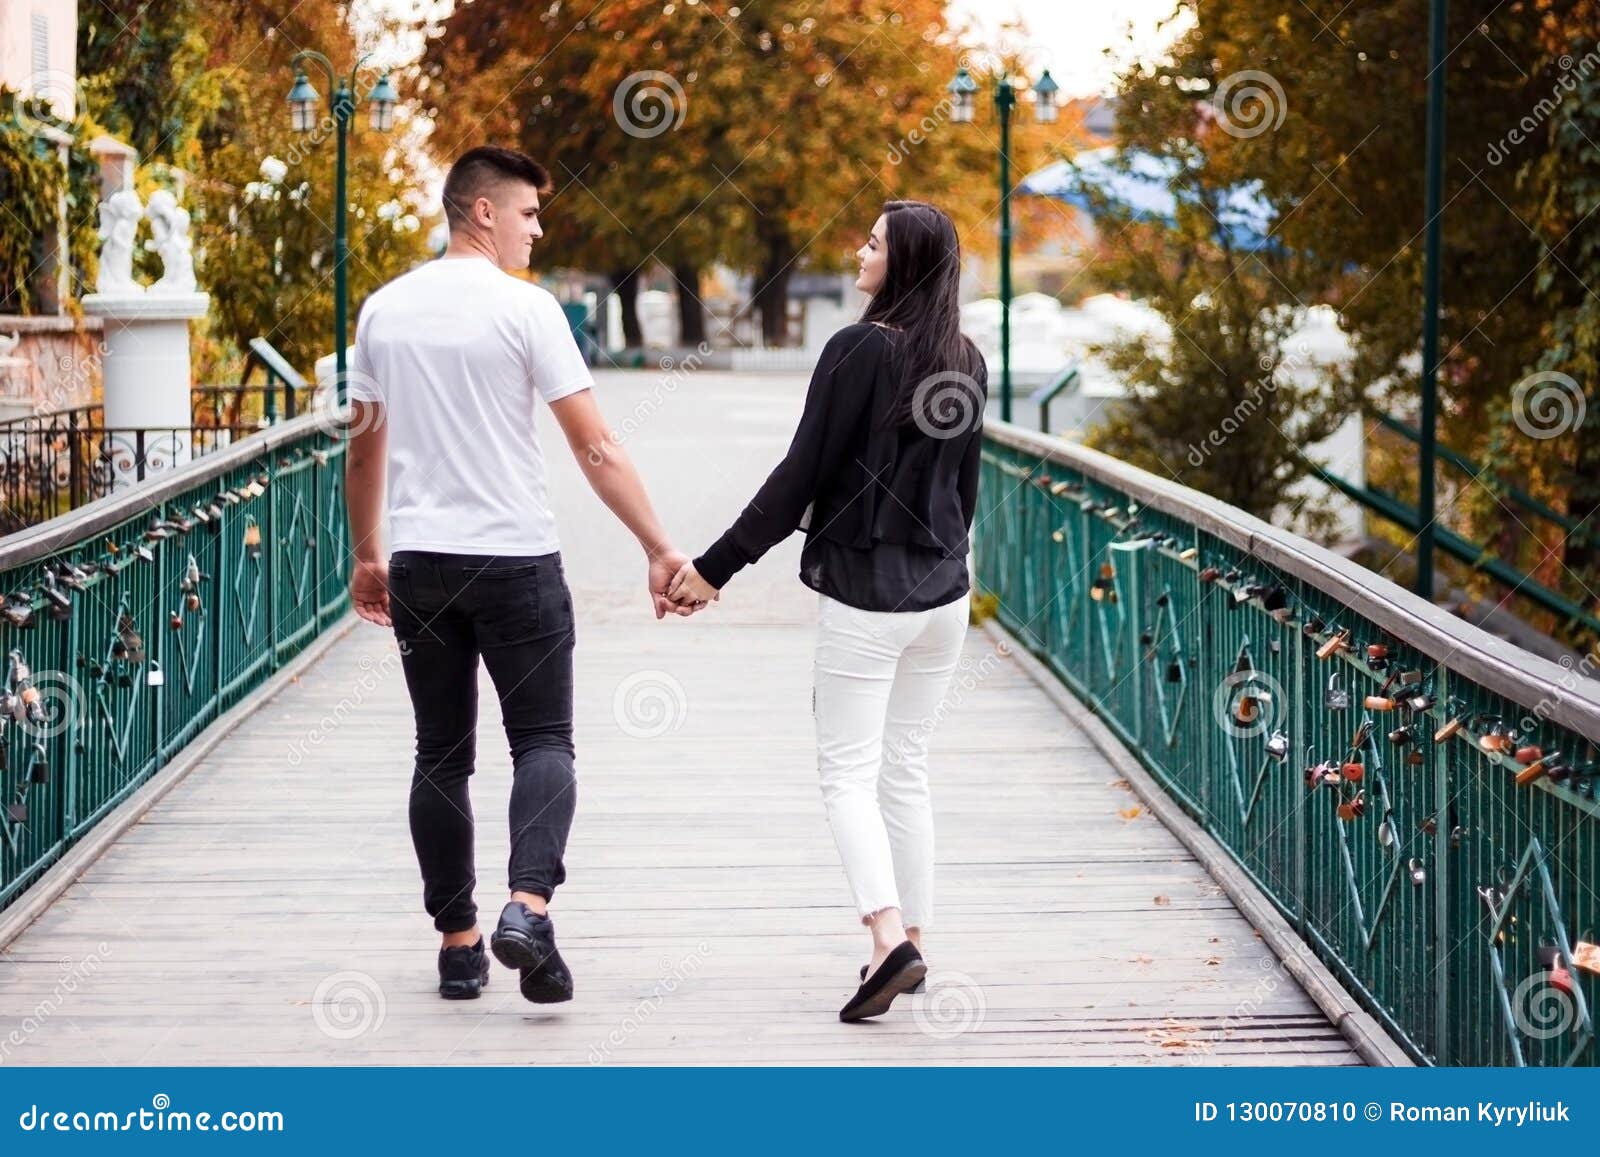 Dating walk